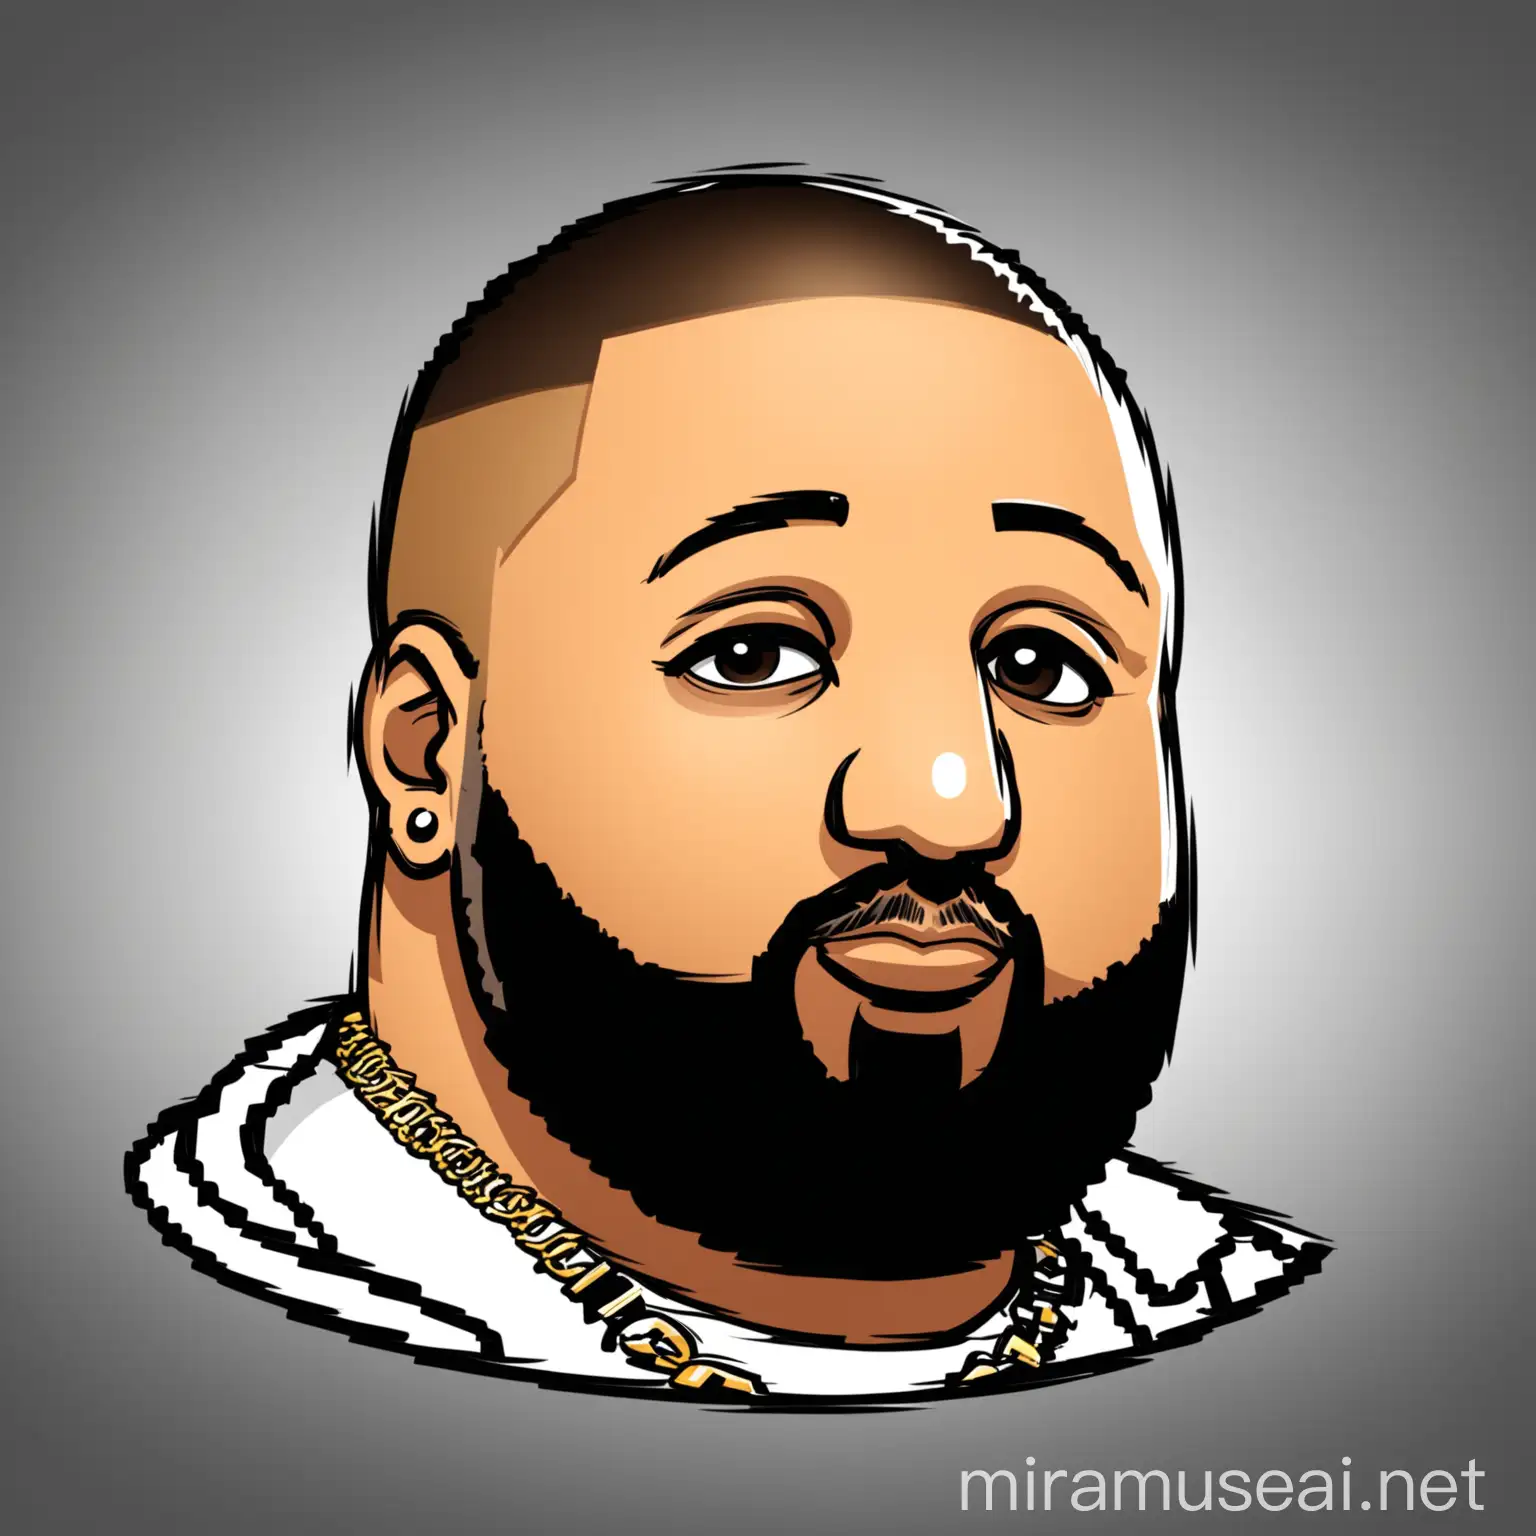 DJ Khaled Cartoon Head Icon Vibrant and Playful Illustration of the Famous Artist